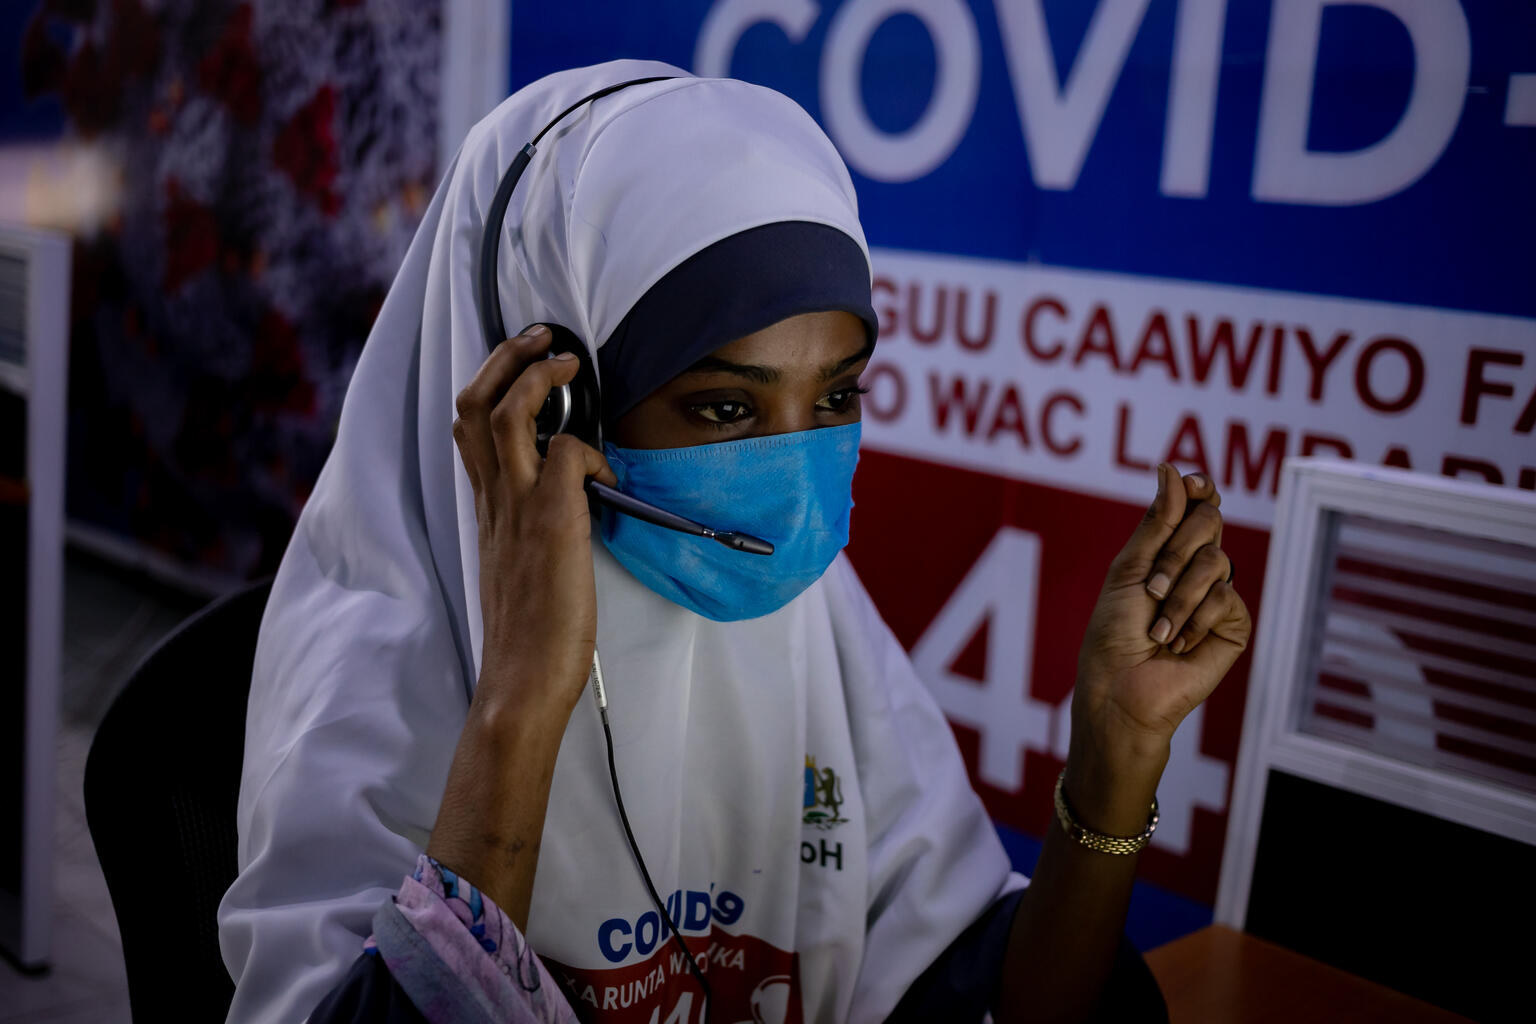 A child helpline operator talks on the phone in Somalia.